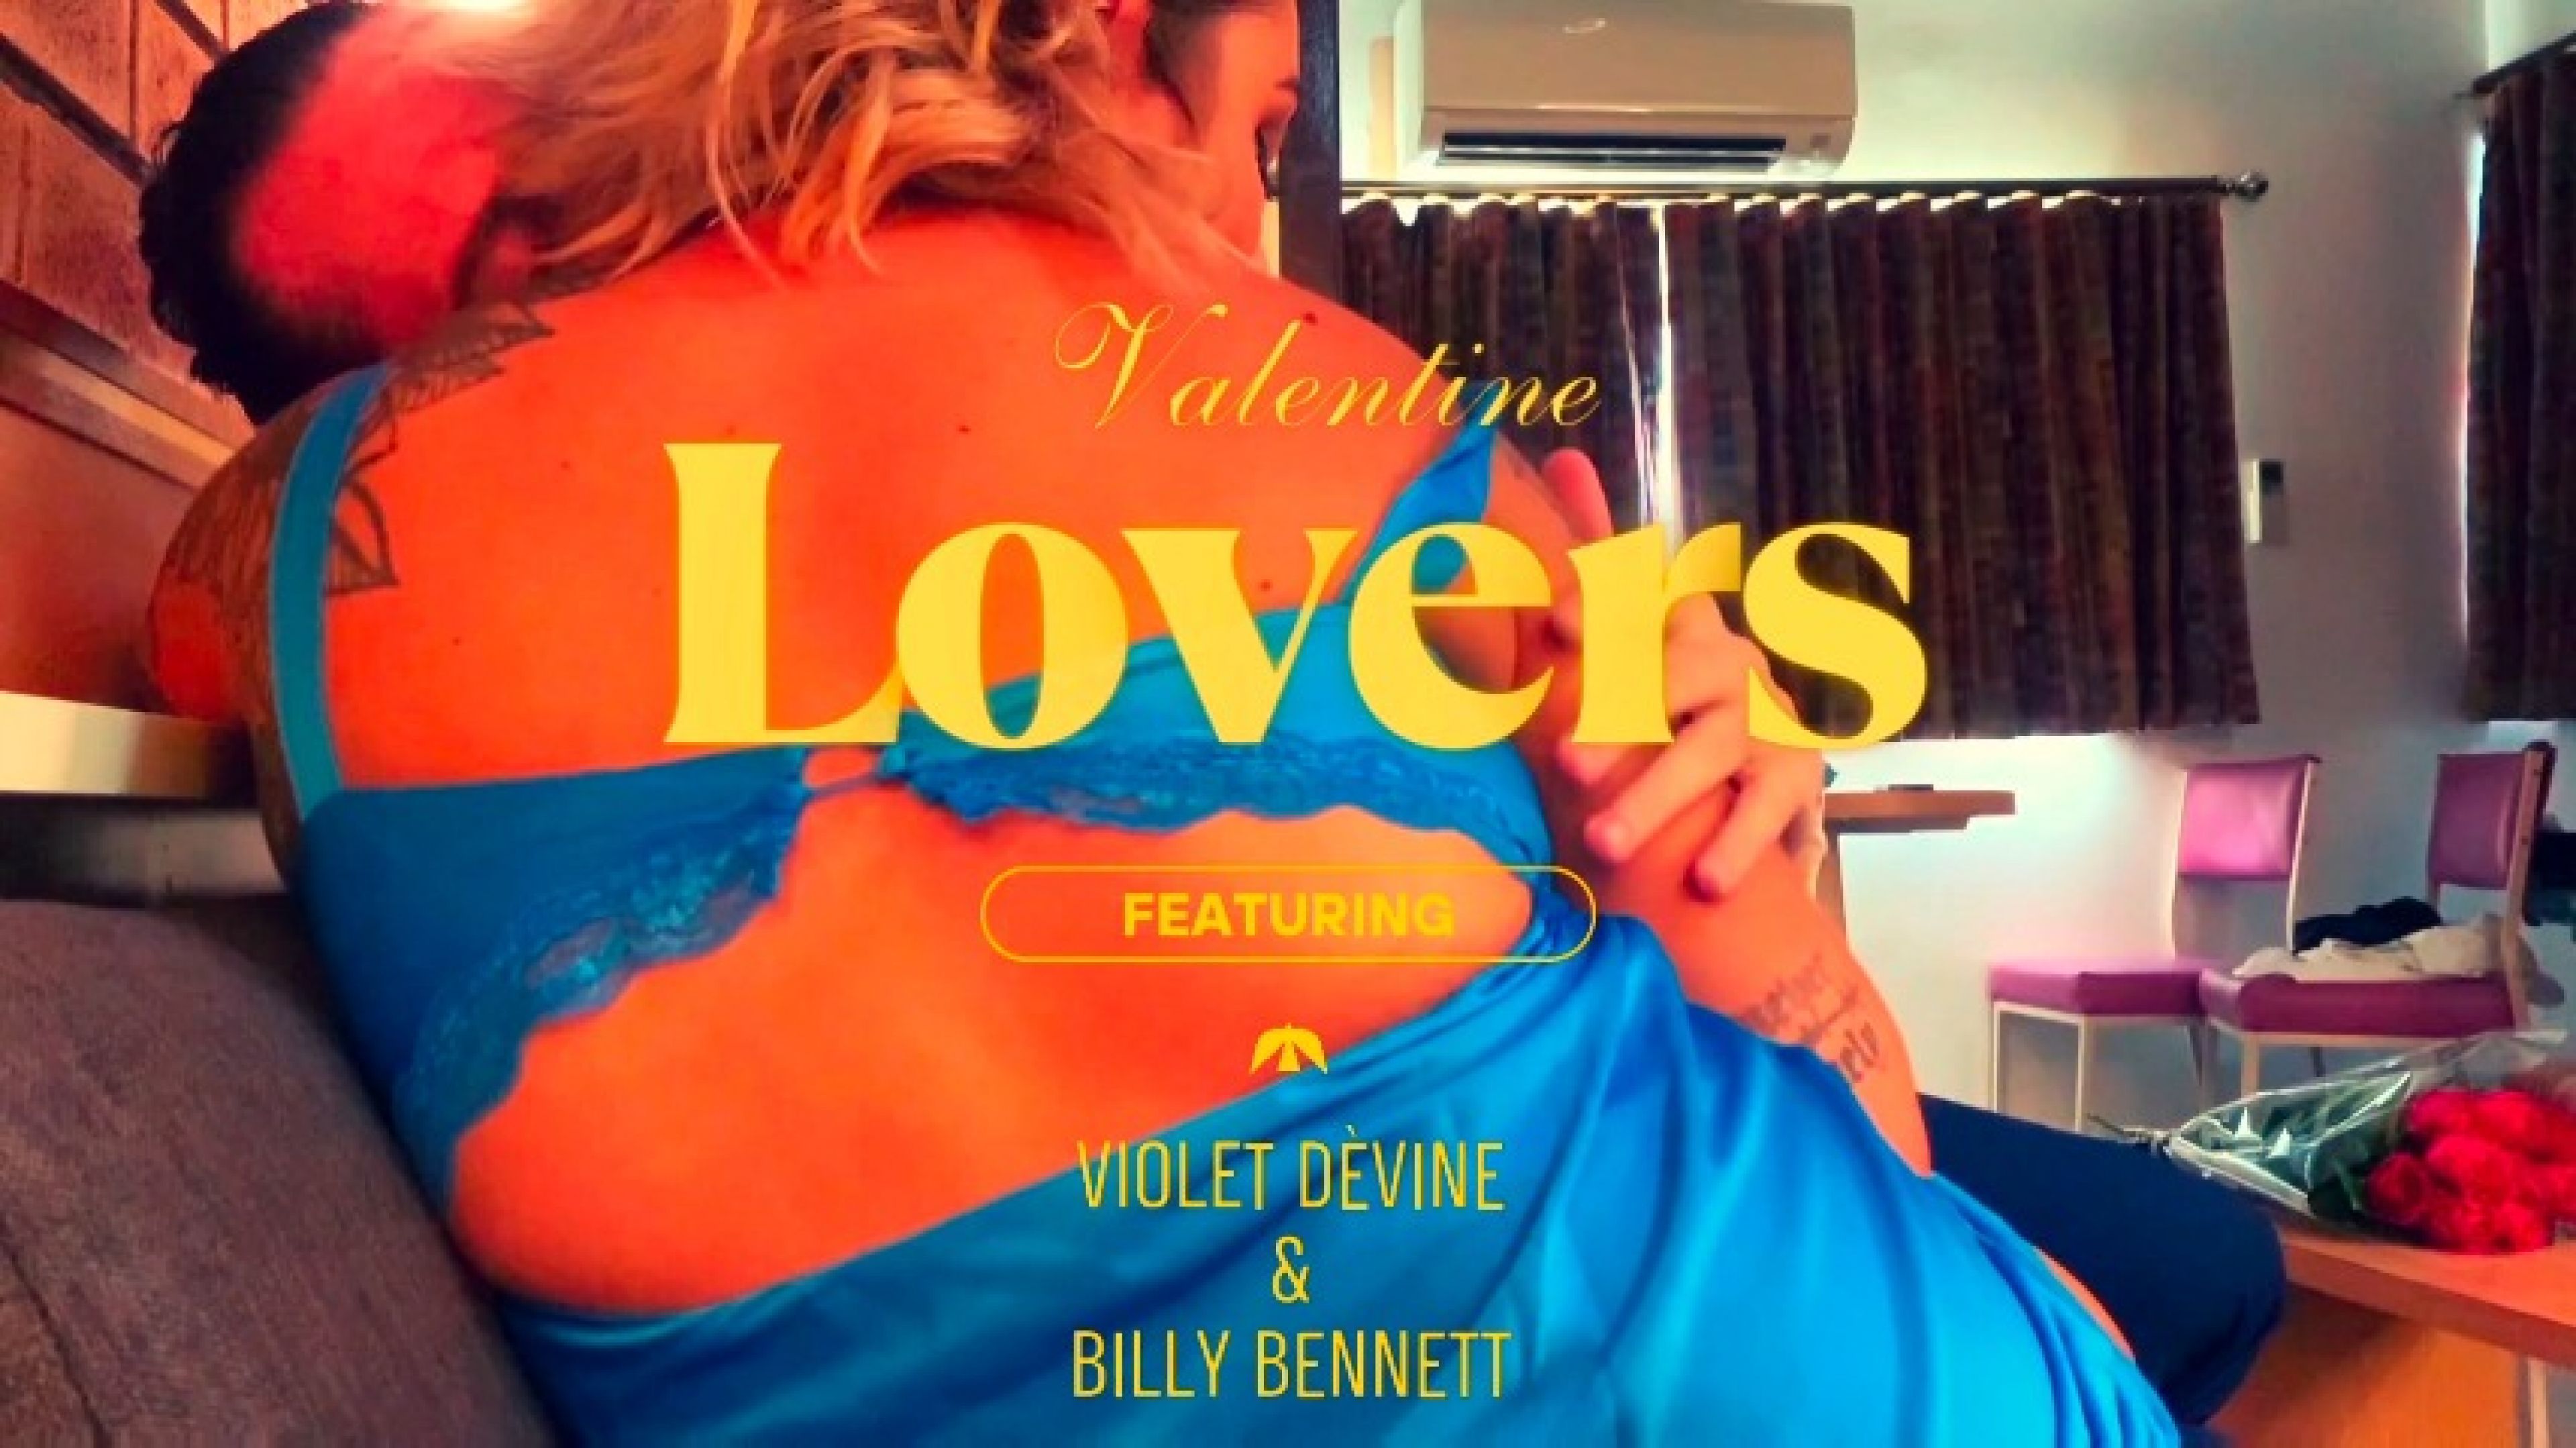 Valentine Lovers with Violet Devine and Billy Bennett